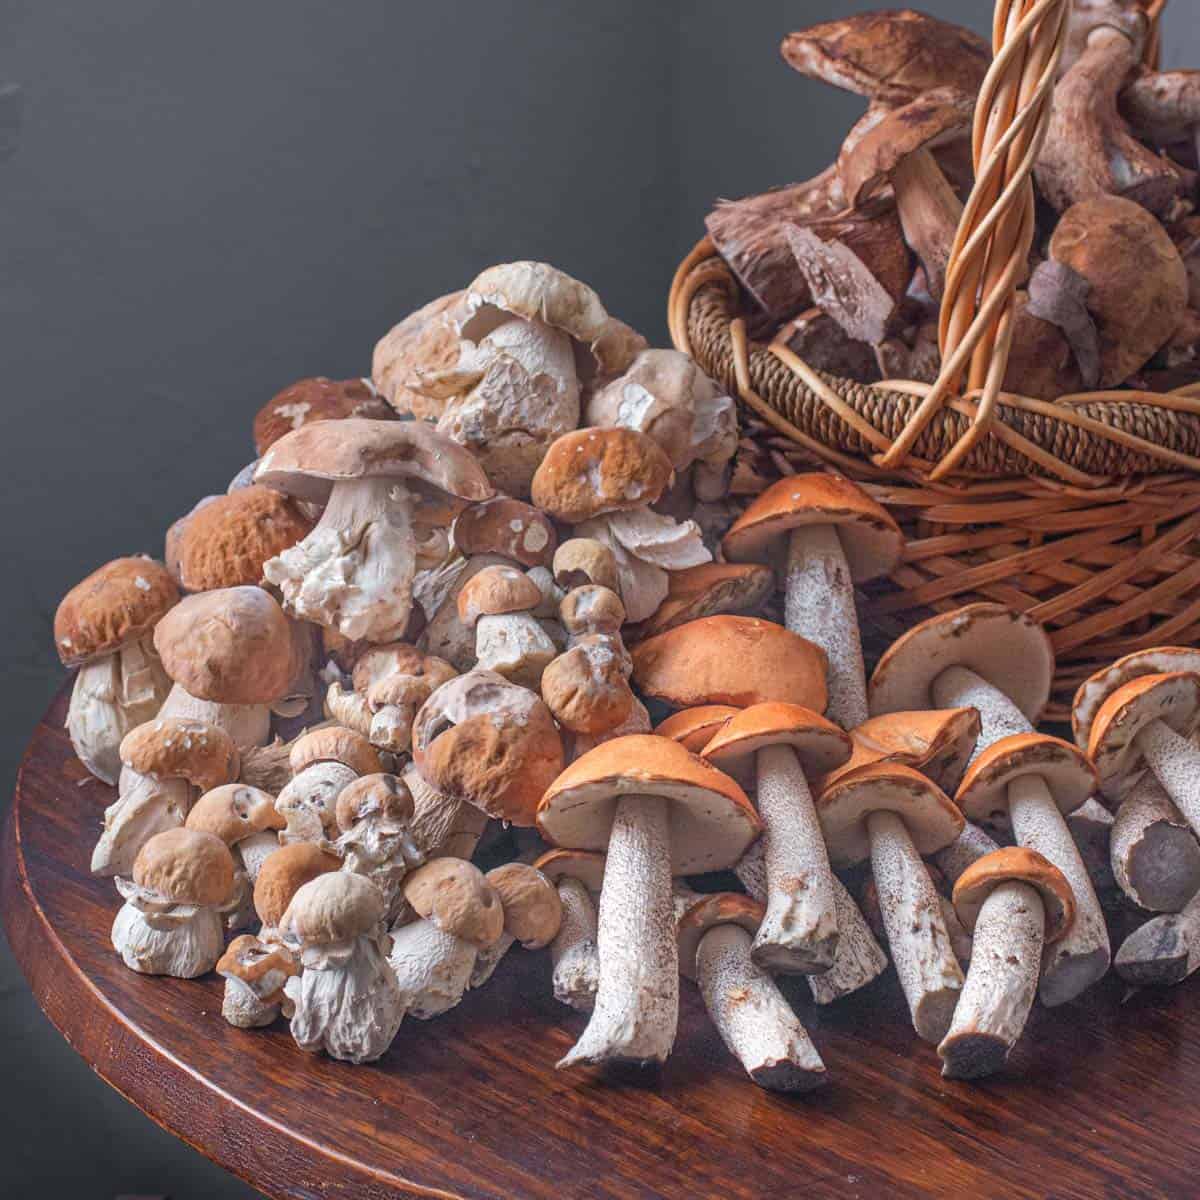 Leccinum and porcini wild mushrooms from Minnesota